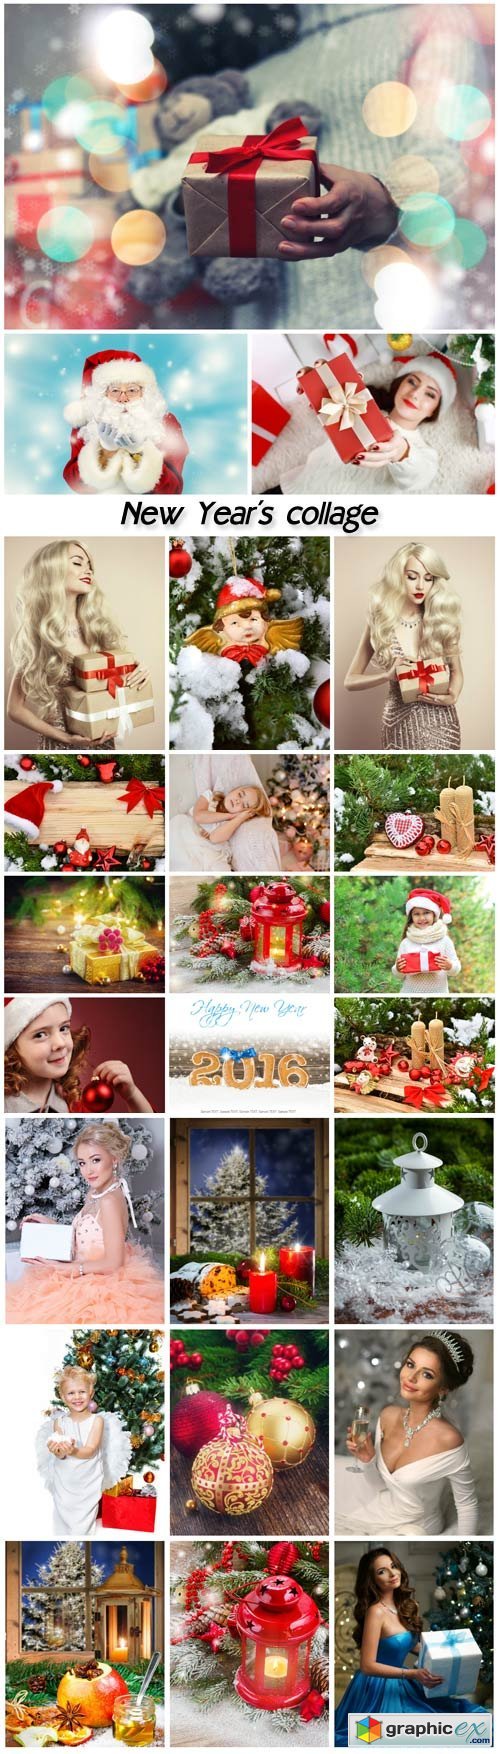  New Year collage, christmas, women, children